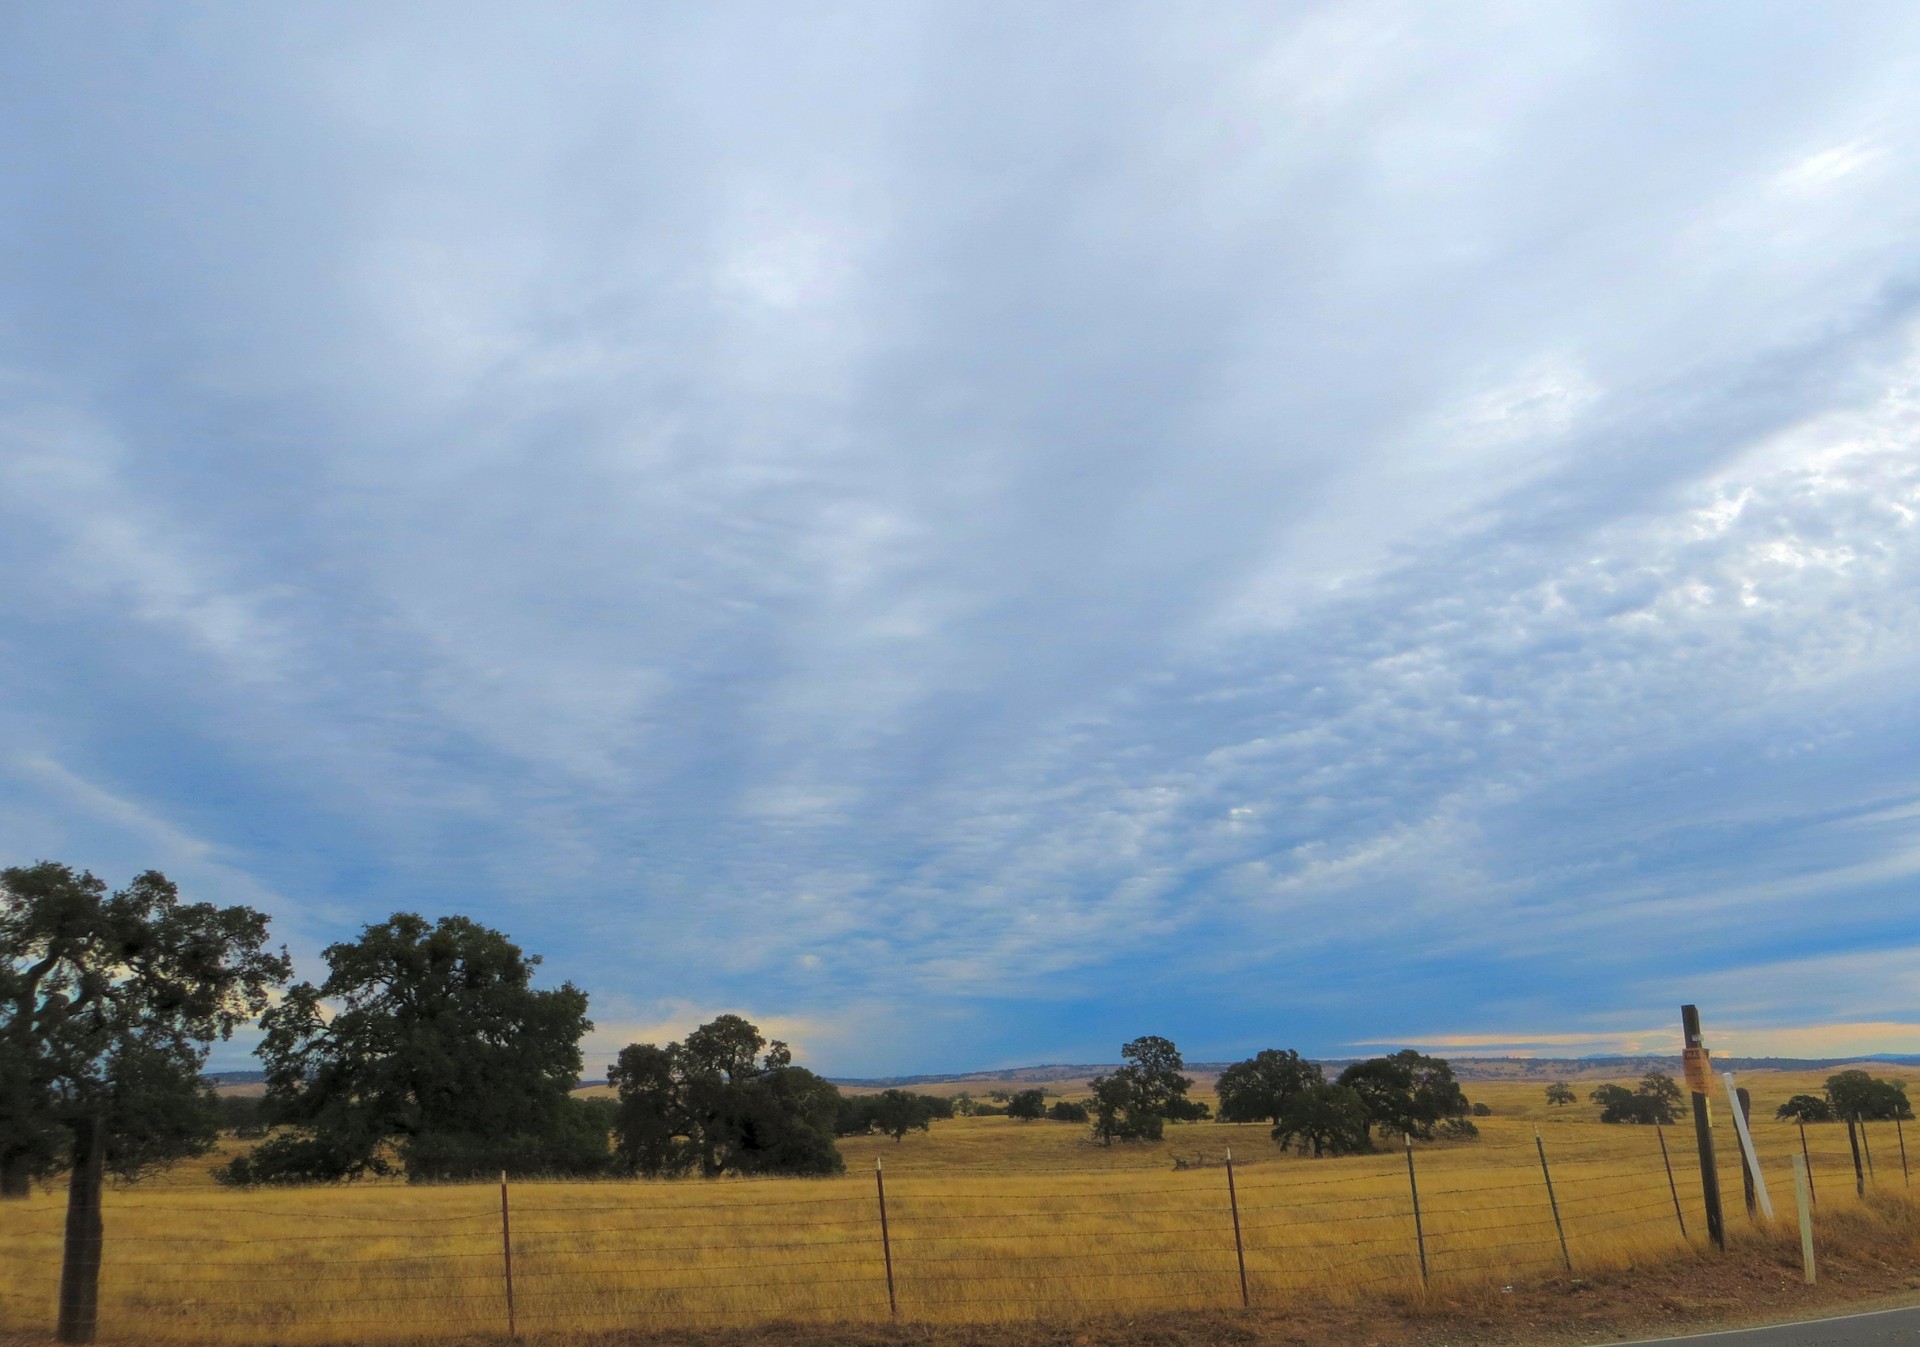 Big sky south of Folsom California; sky, field, landscape